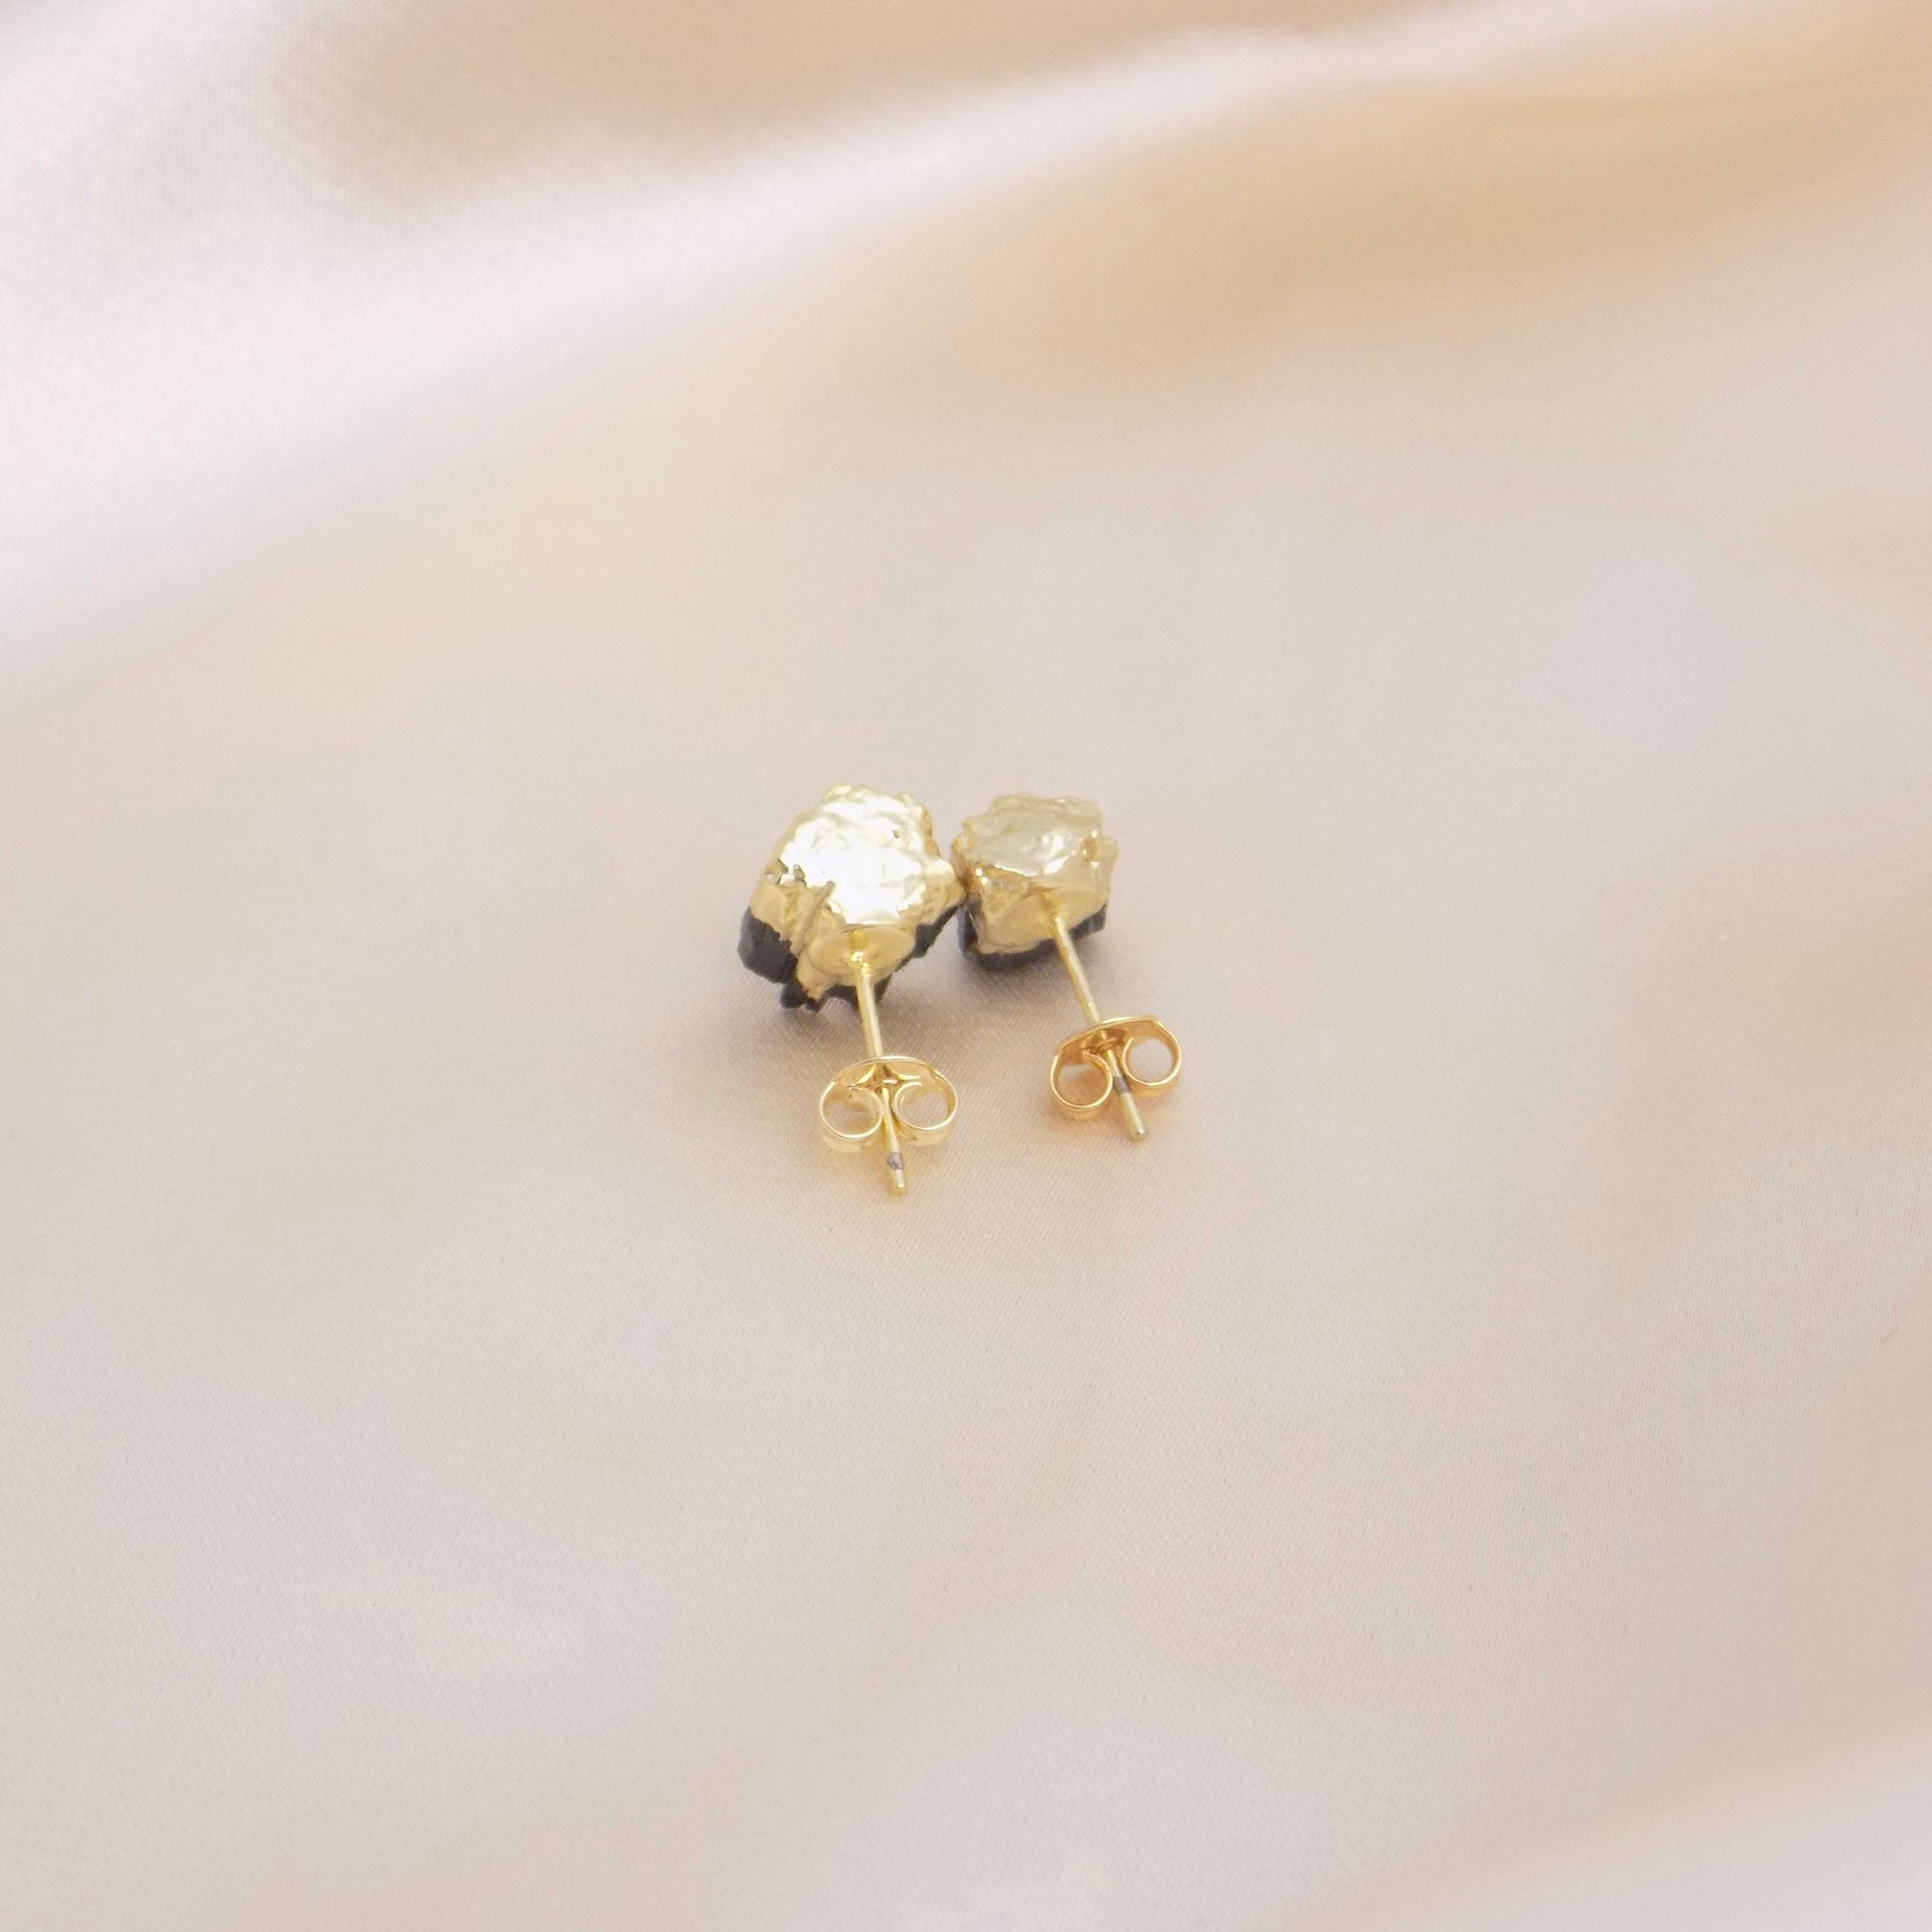 Raw Black Tourmaline Earrings Stud, Boho Chunky Crystal Studs, Gifts For Her, G13-532